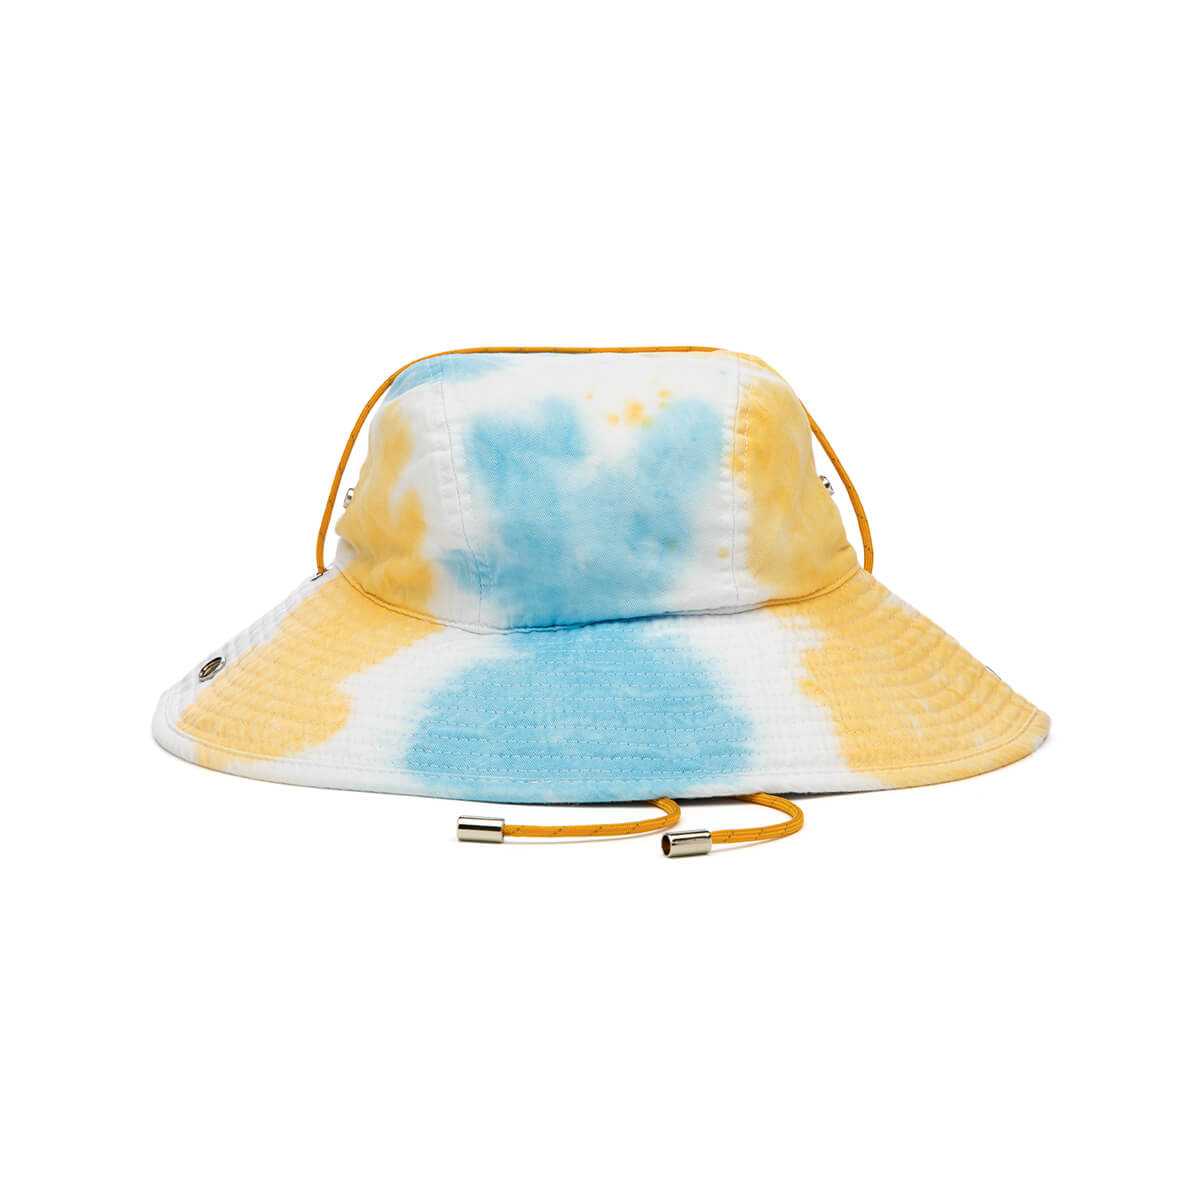 KkCo Concepts Exclusive Vacationer West Camp Hat (CLOUD TIE-DYE)